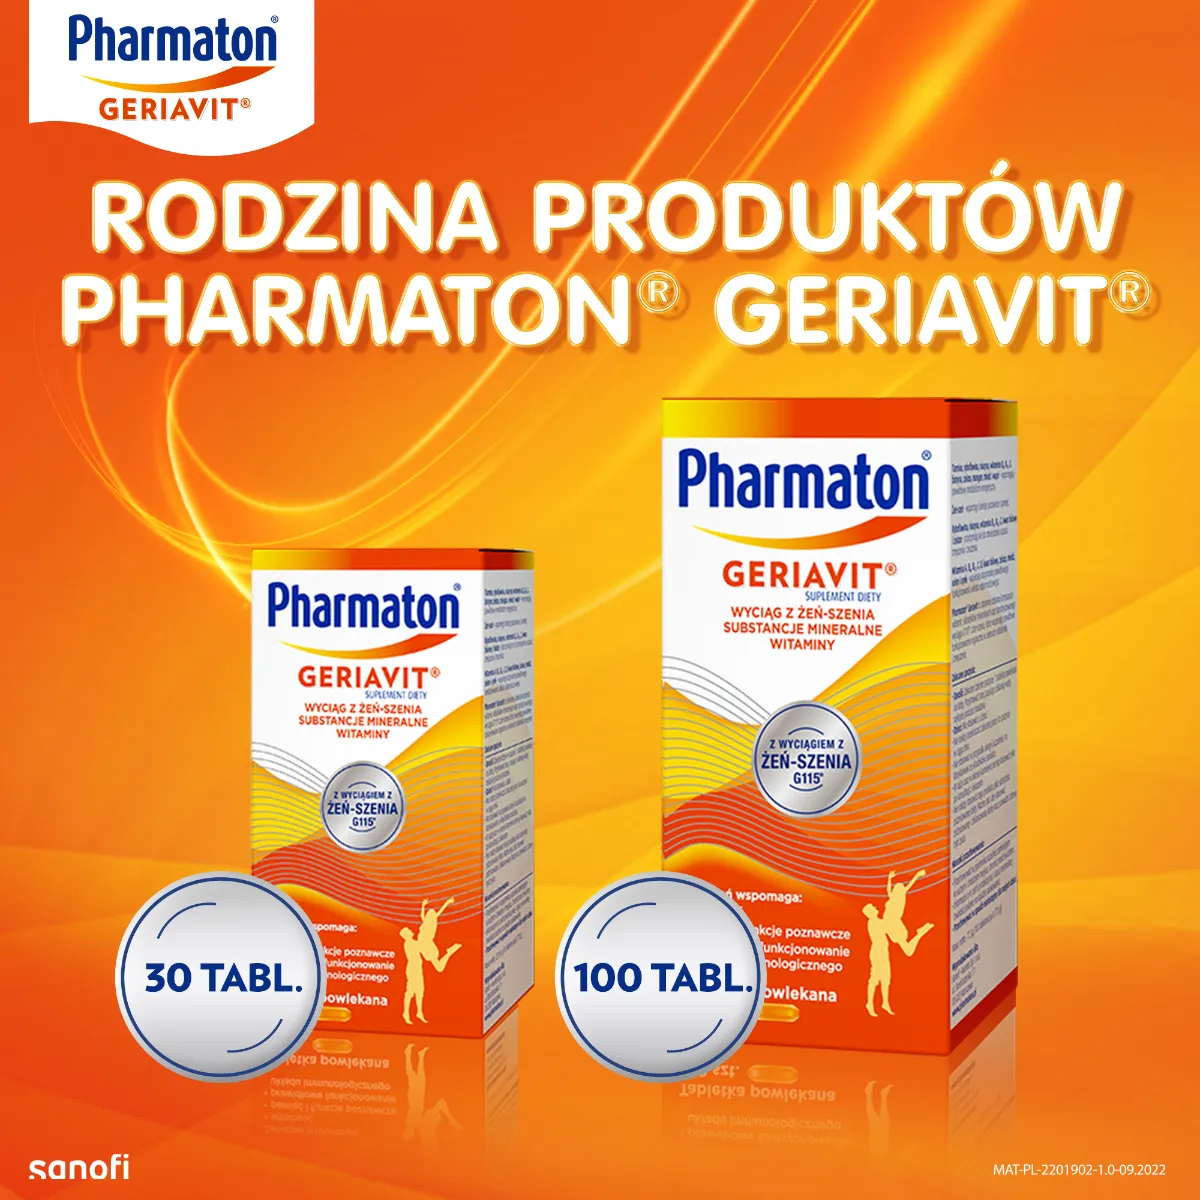 Pharmaton Geriavit, suplement diety, 30 tabletek powlekanych 